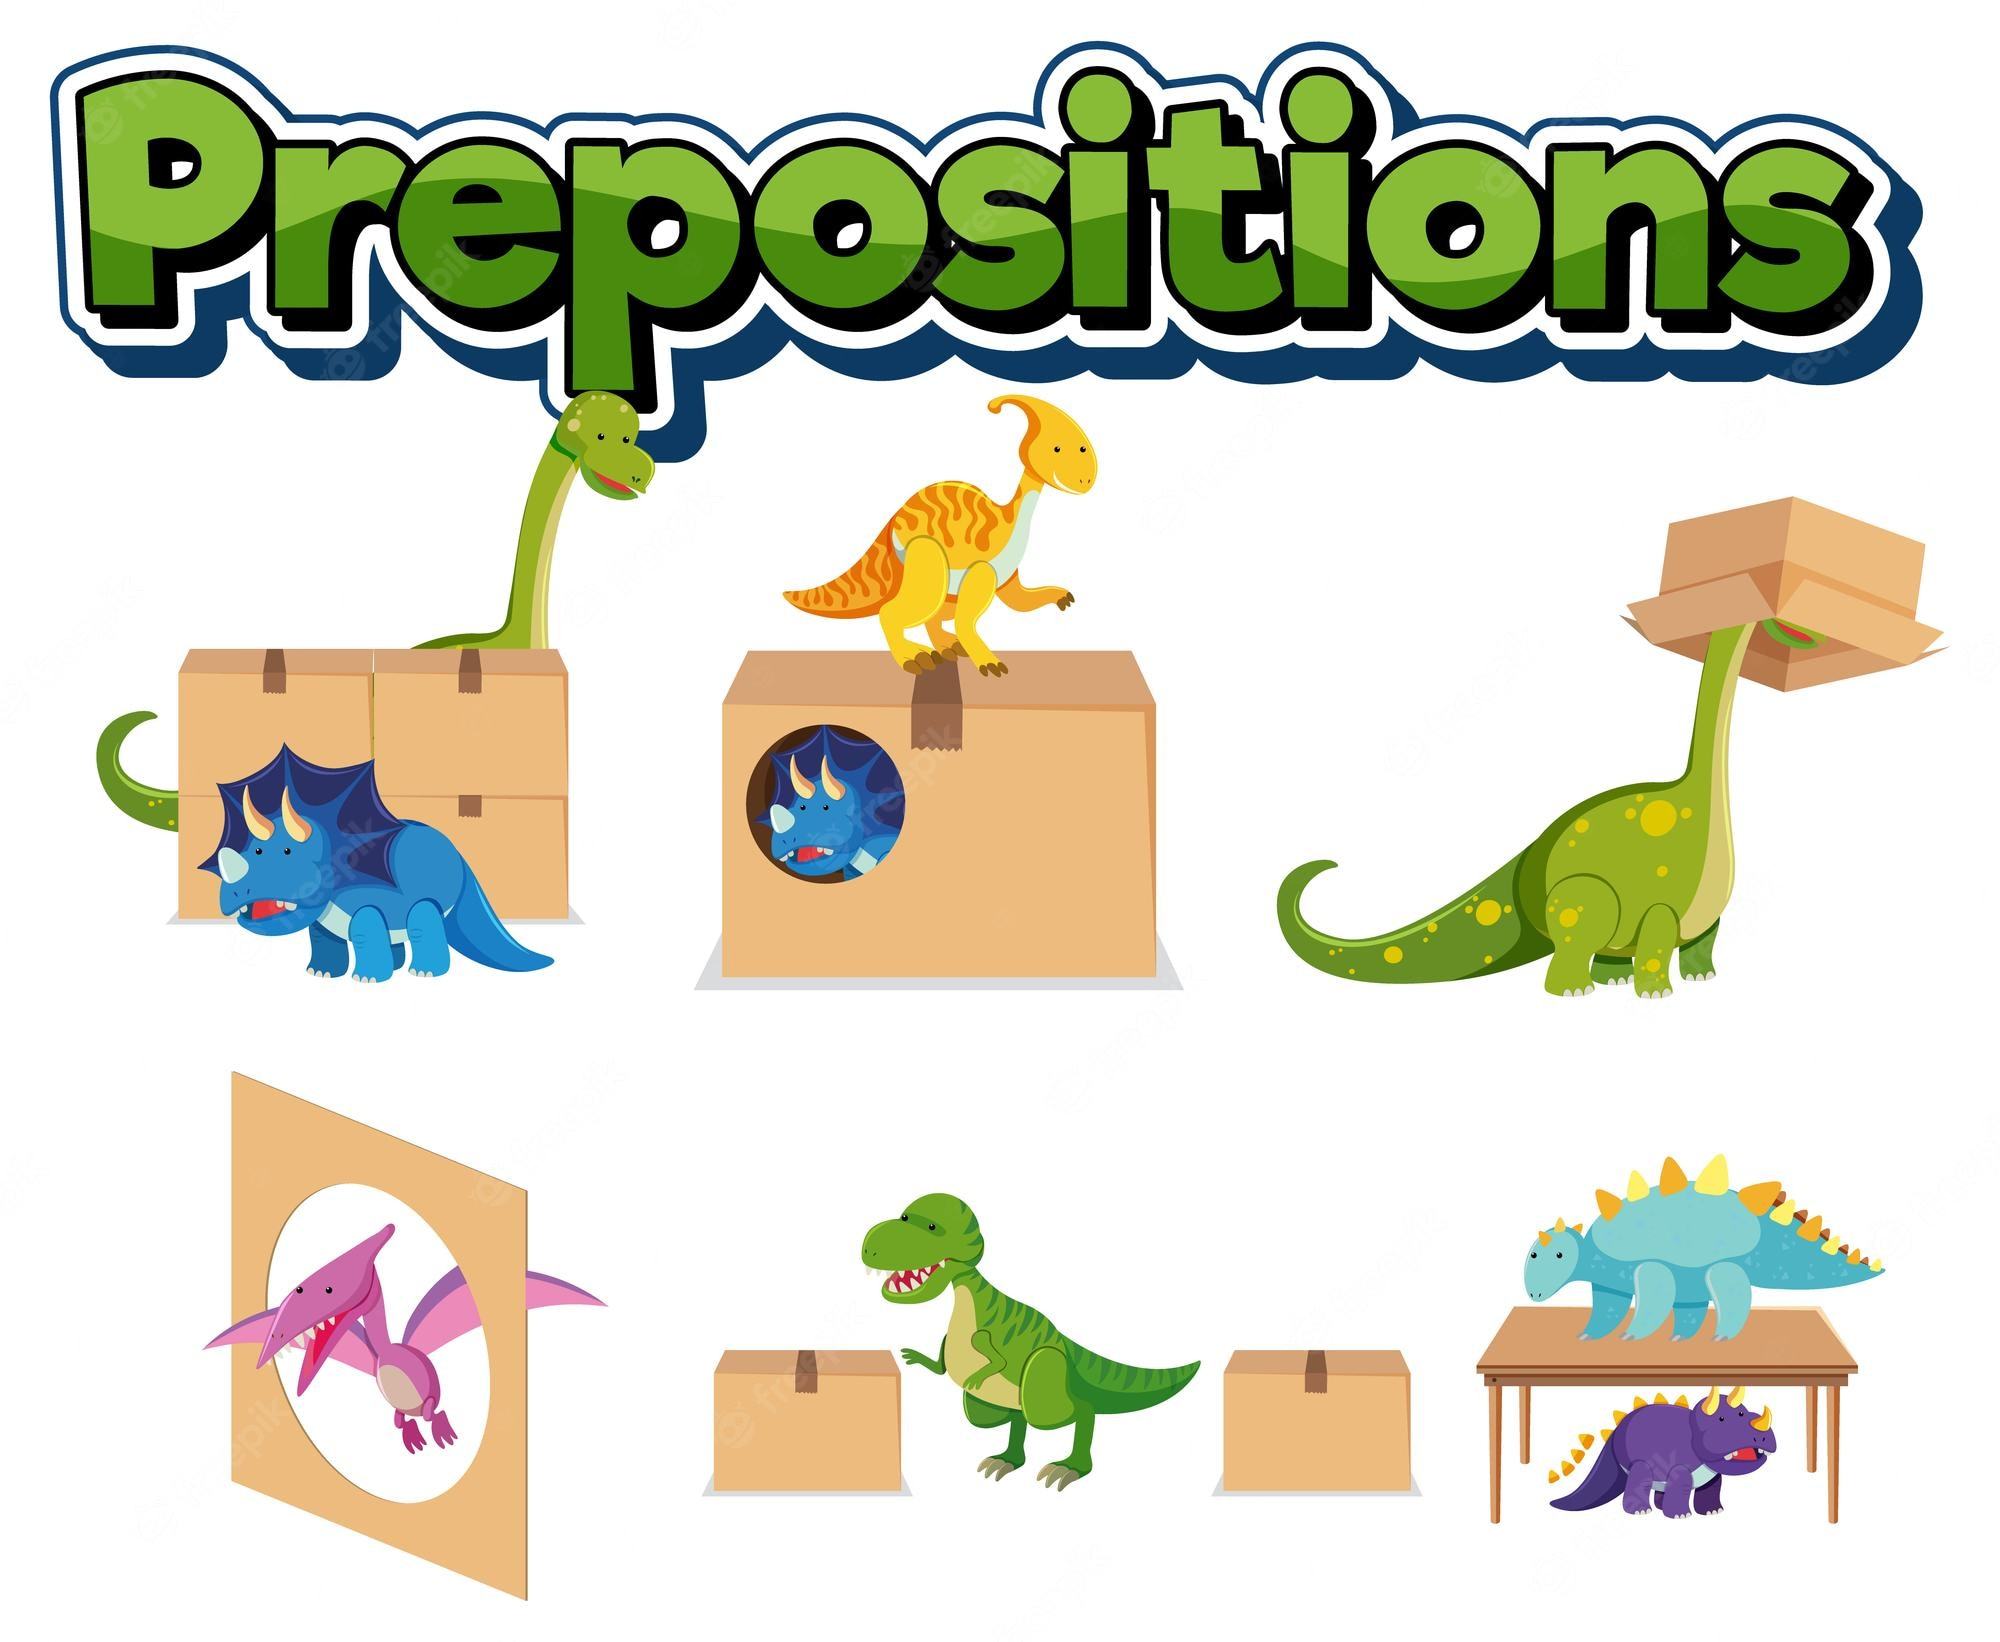 Prepositions - Year 7 - Quizizz